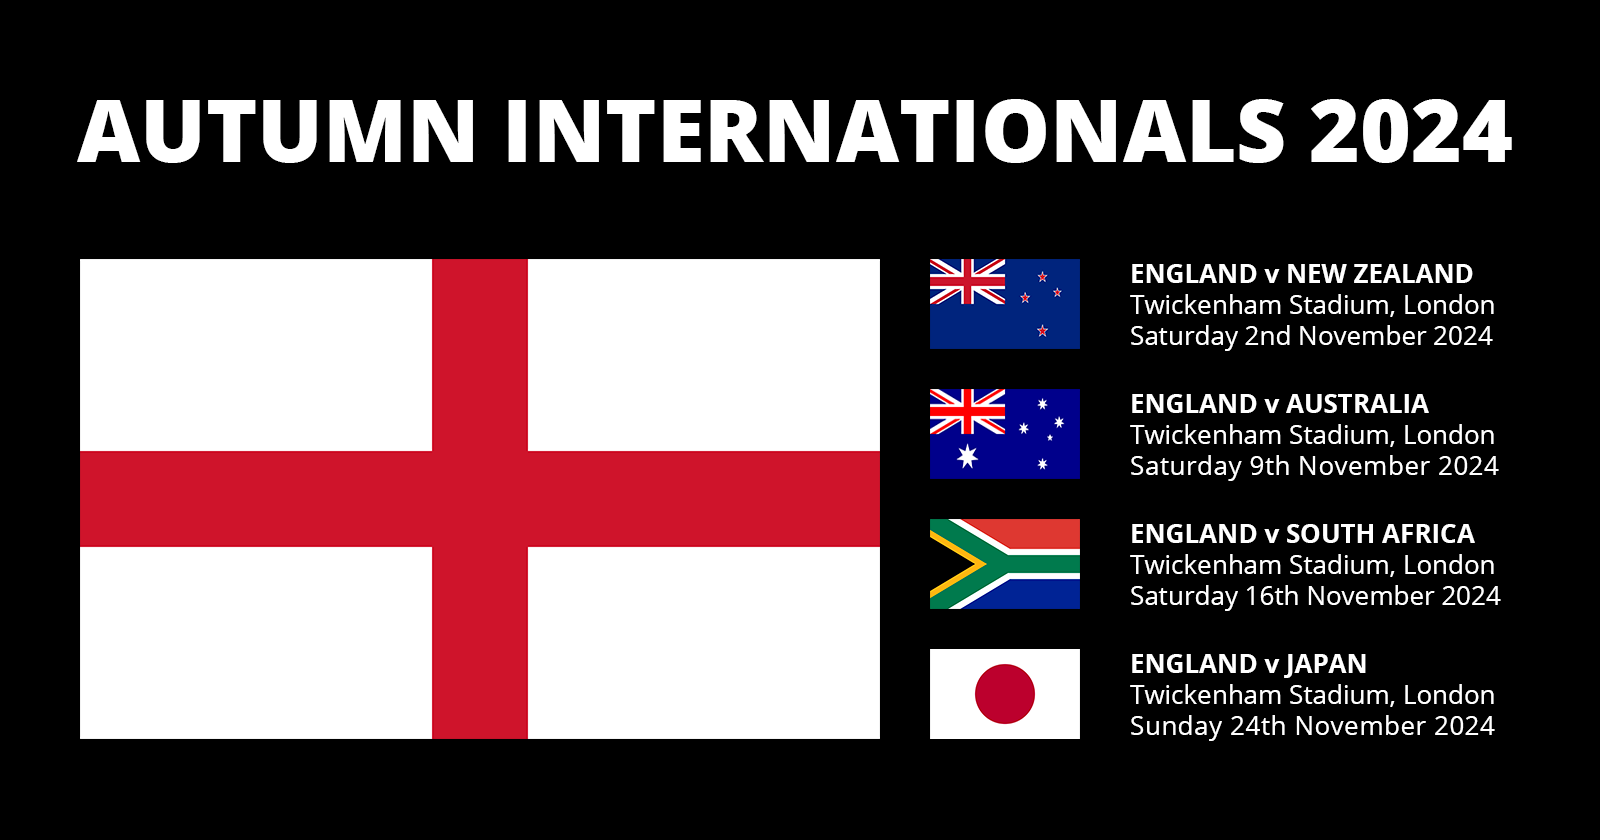 England Autumn Internationals 2024 Rugby Fixtures